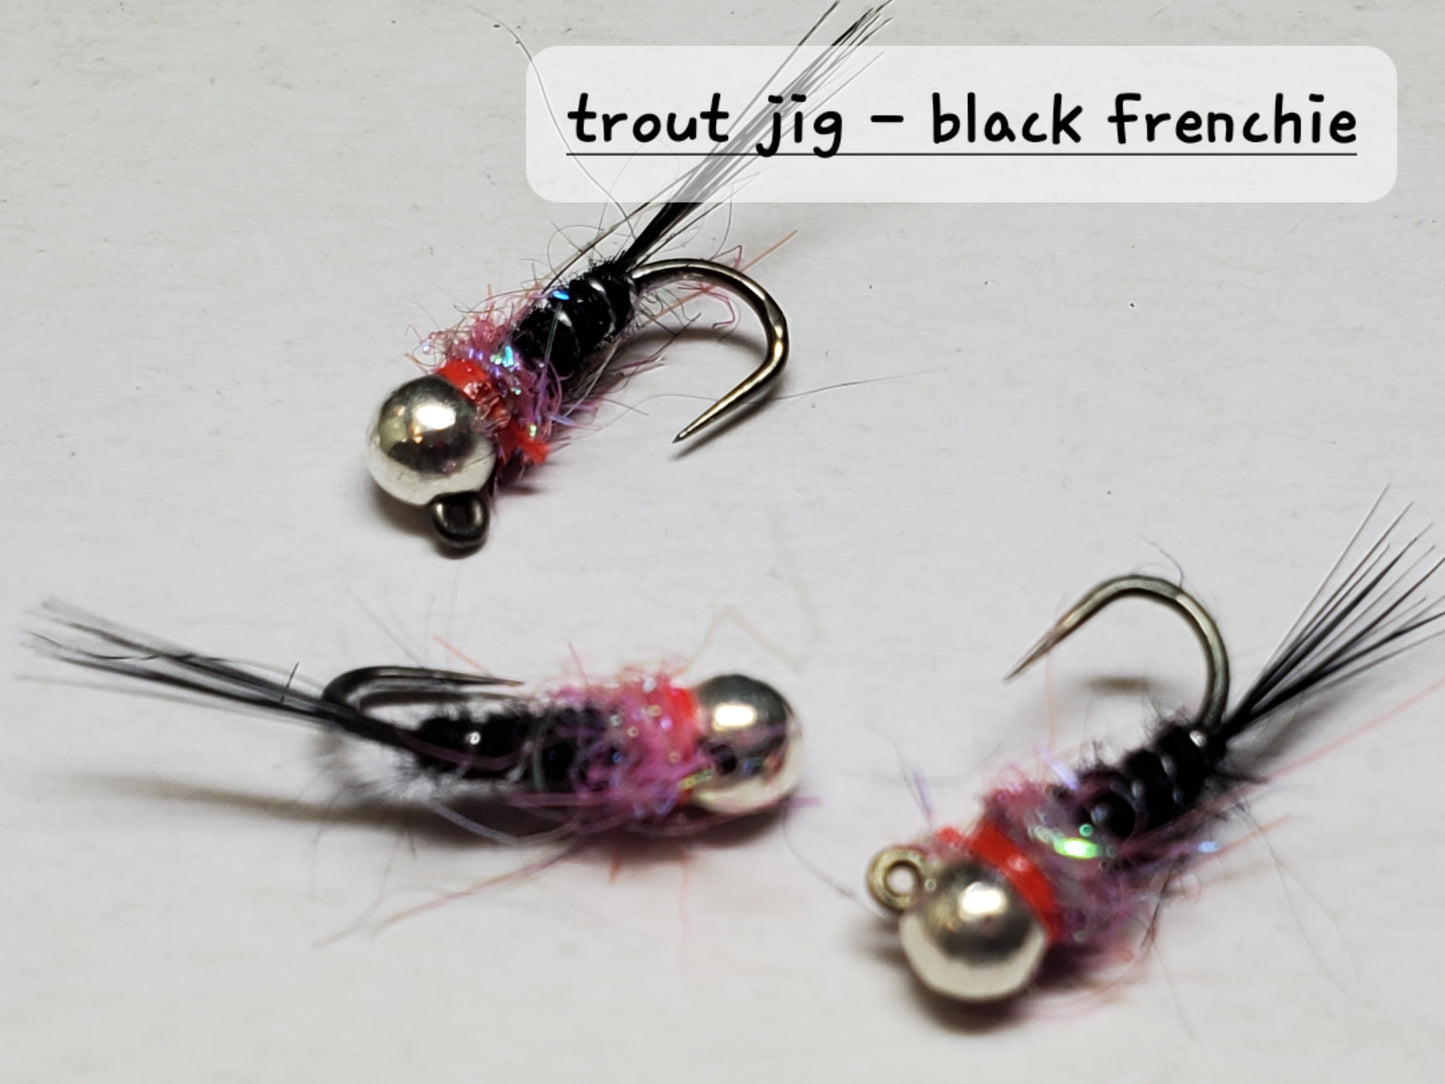 Trout Jig, Tungsten Bead Head Trout Jig, Trout Jig Nymph, Bead Head Nymph, Trout Jig Black Frenchie